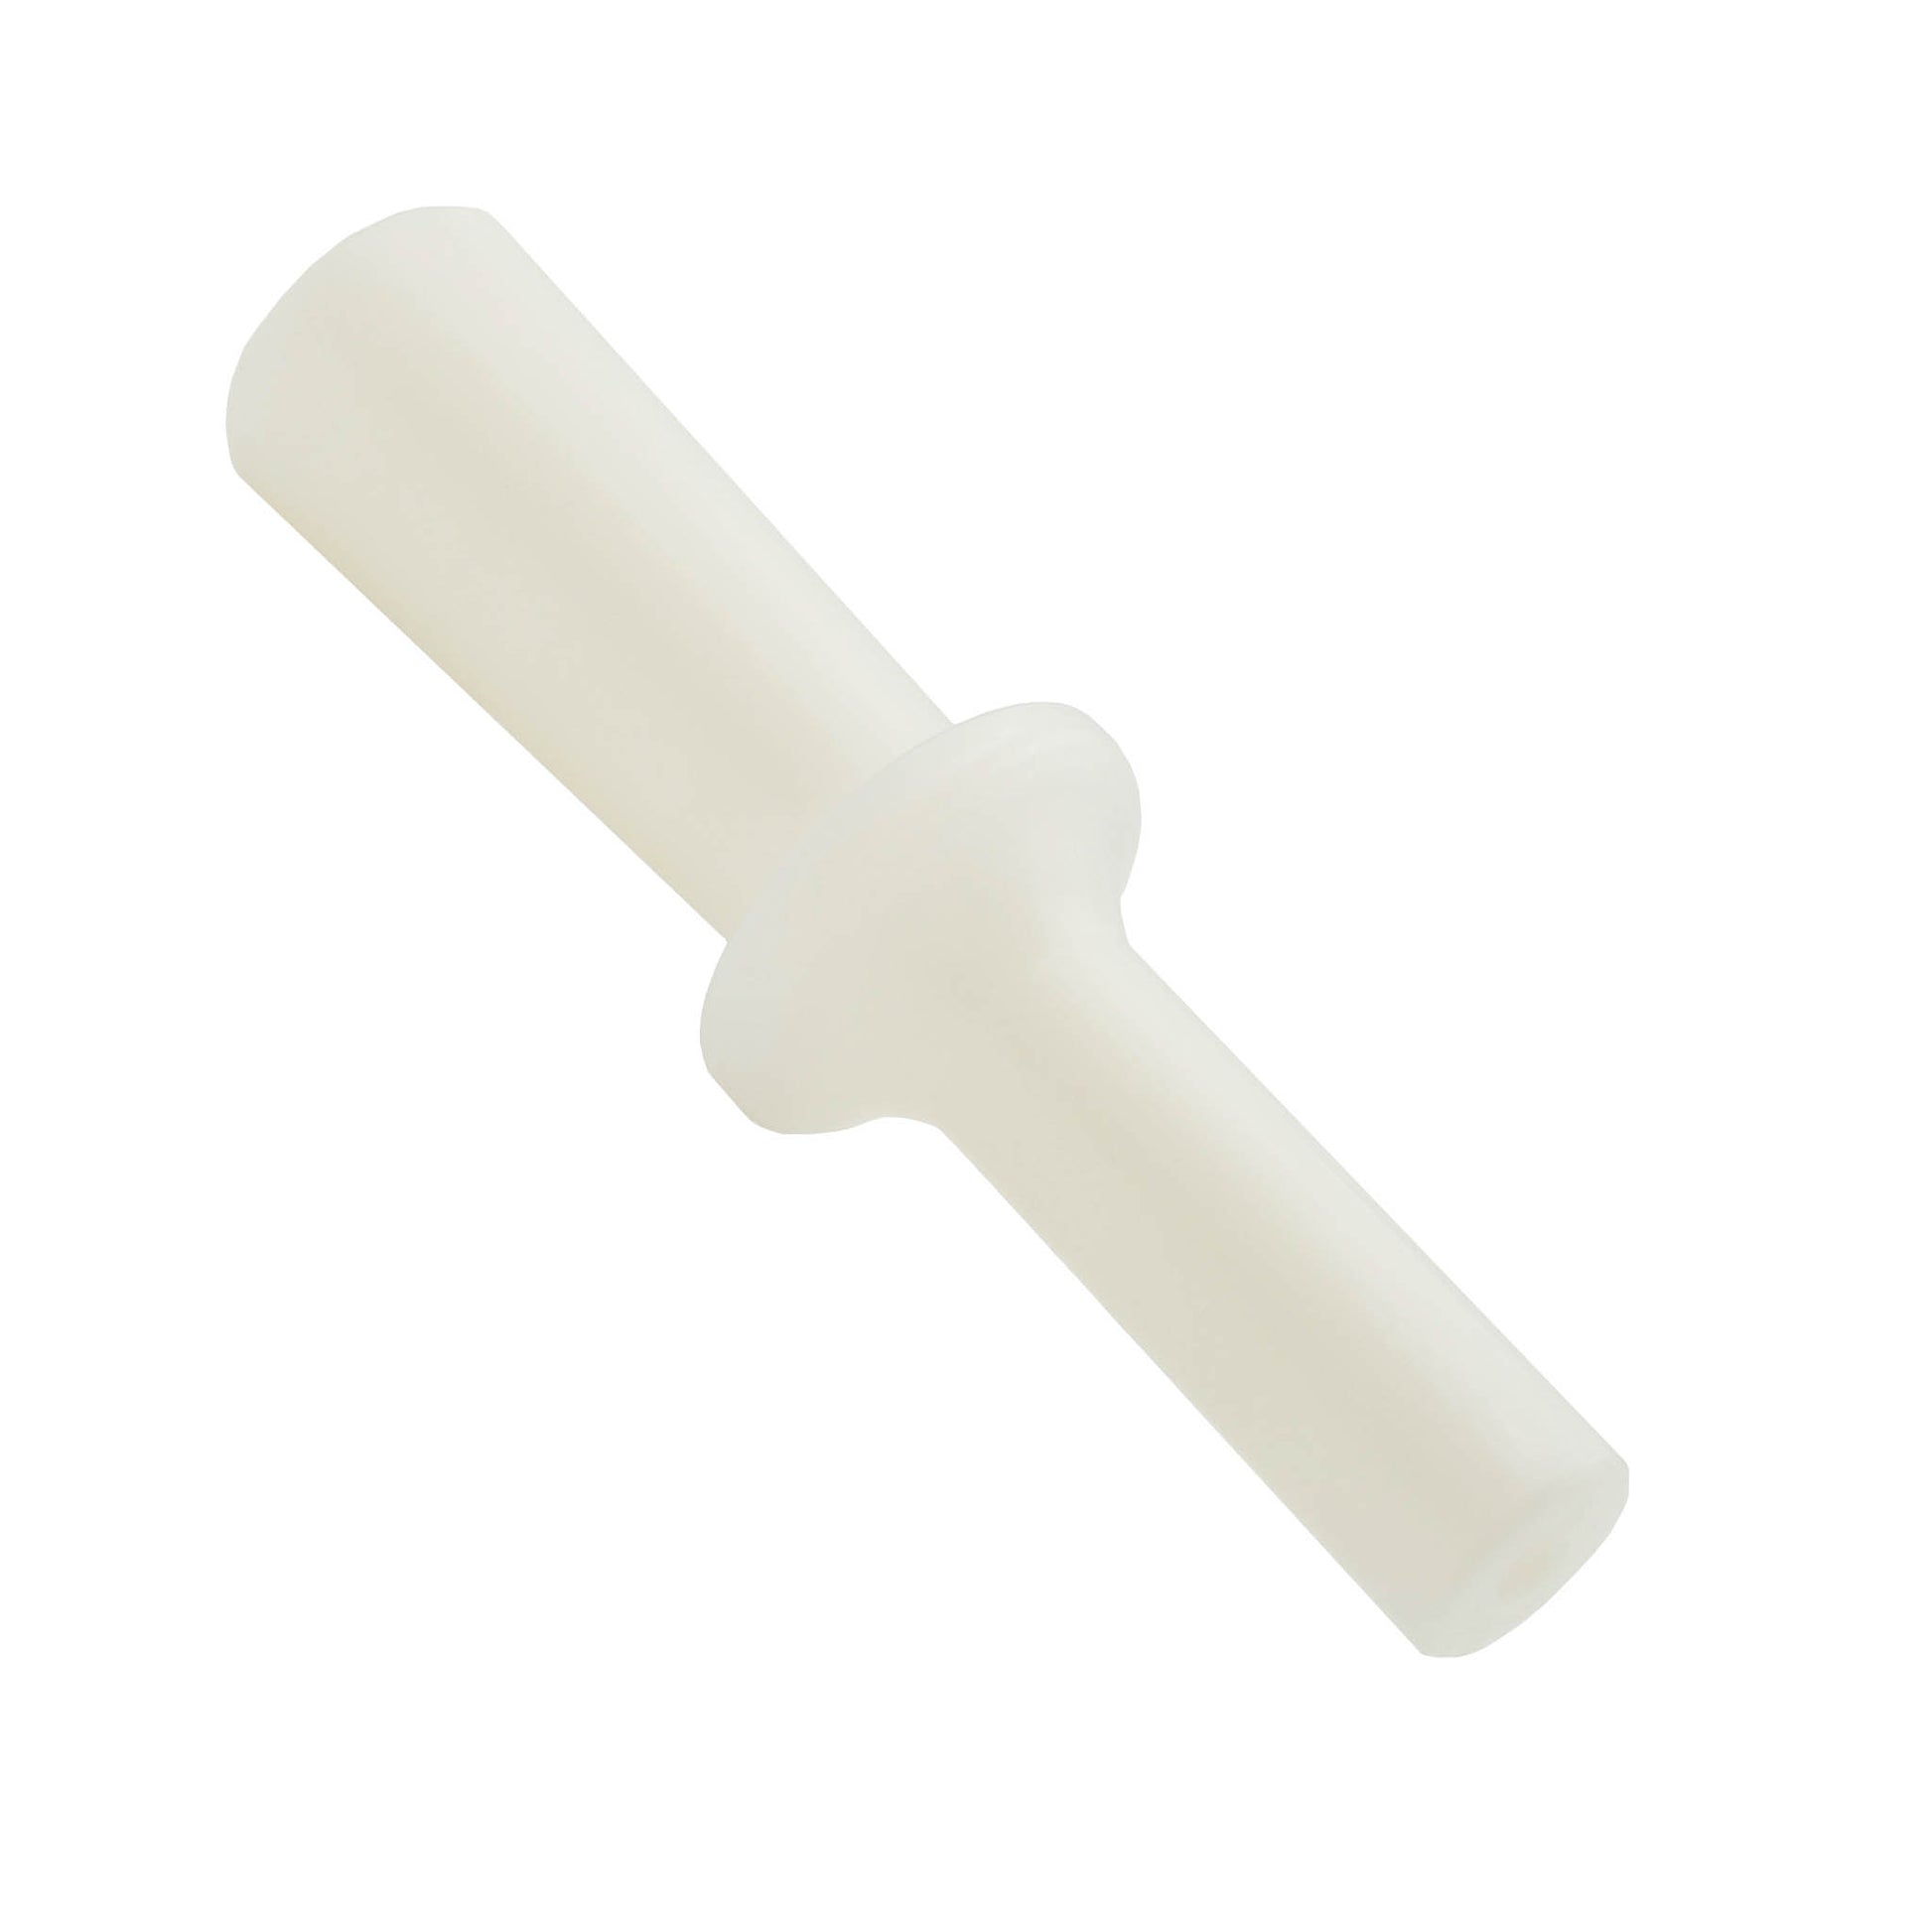 White food grade plastic plunger